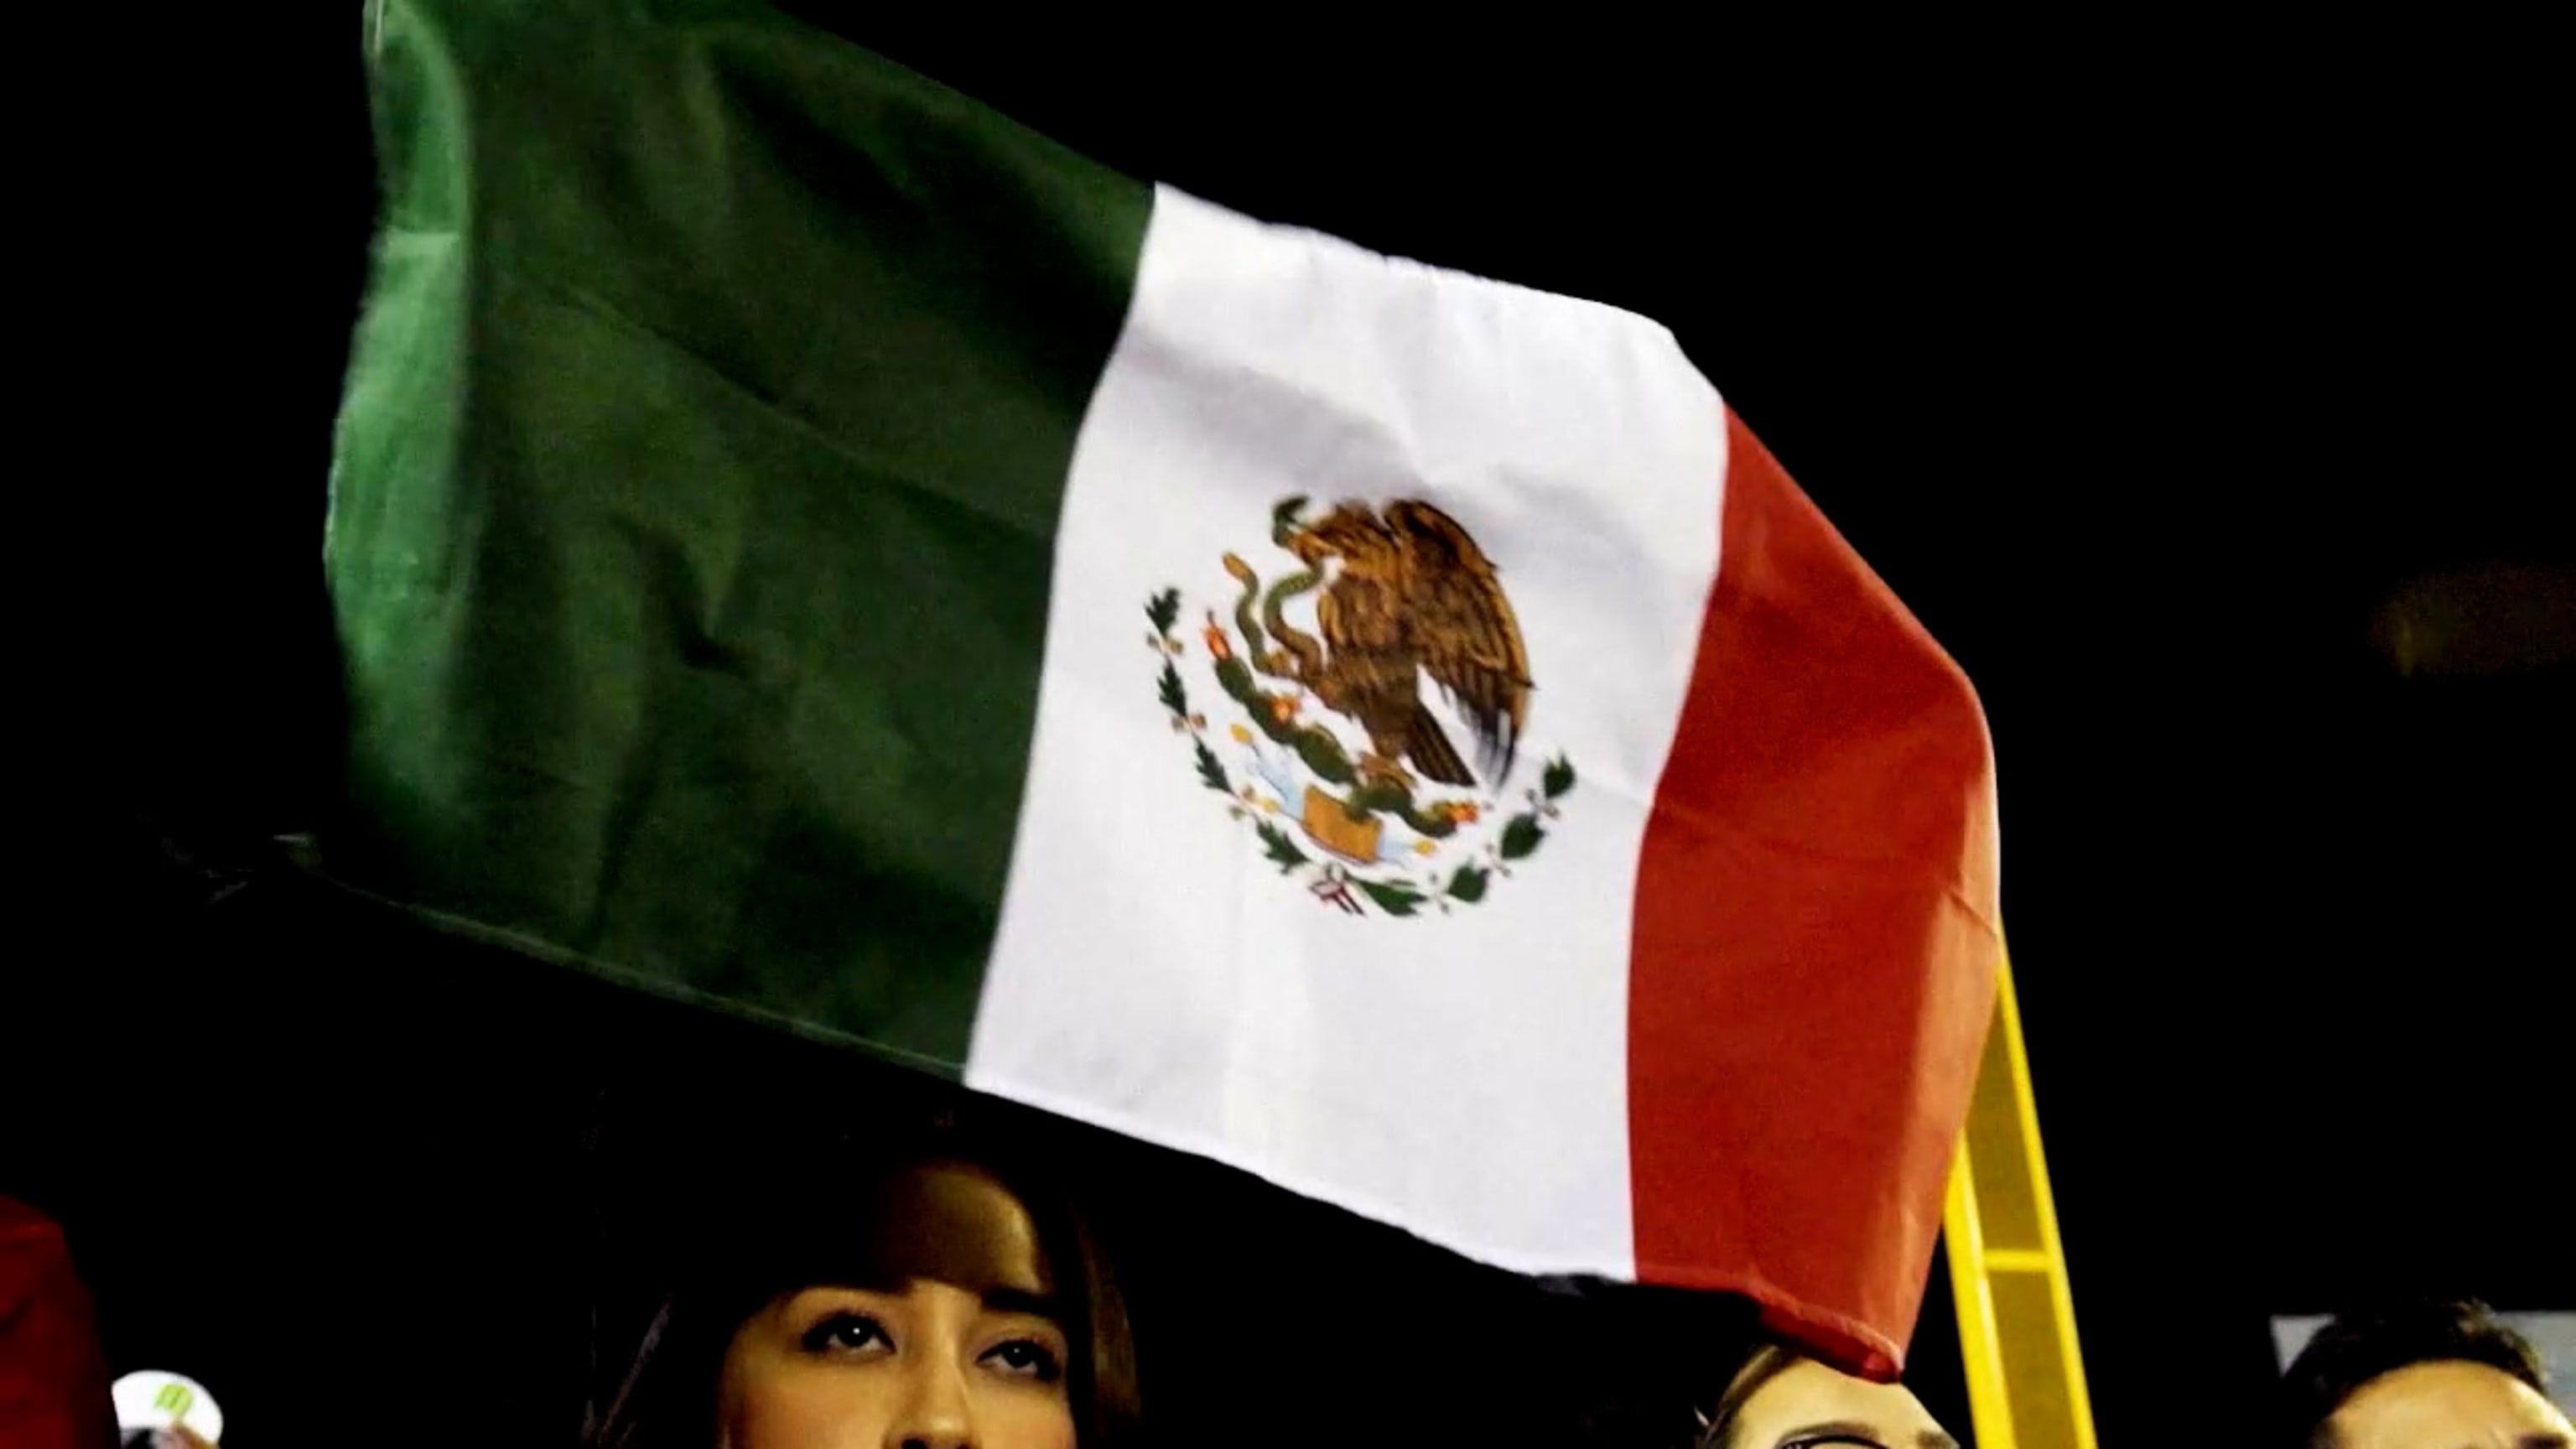 Mexico's WBC history: Has Mexico ever won a World Baseball Classic  championship?